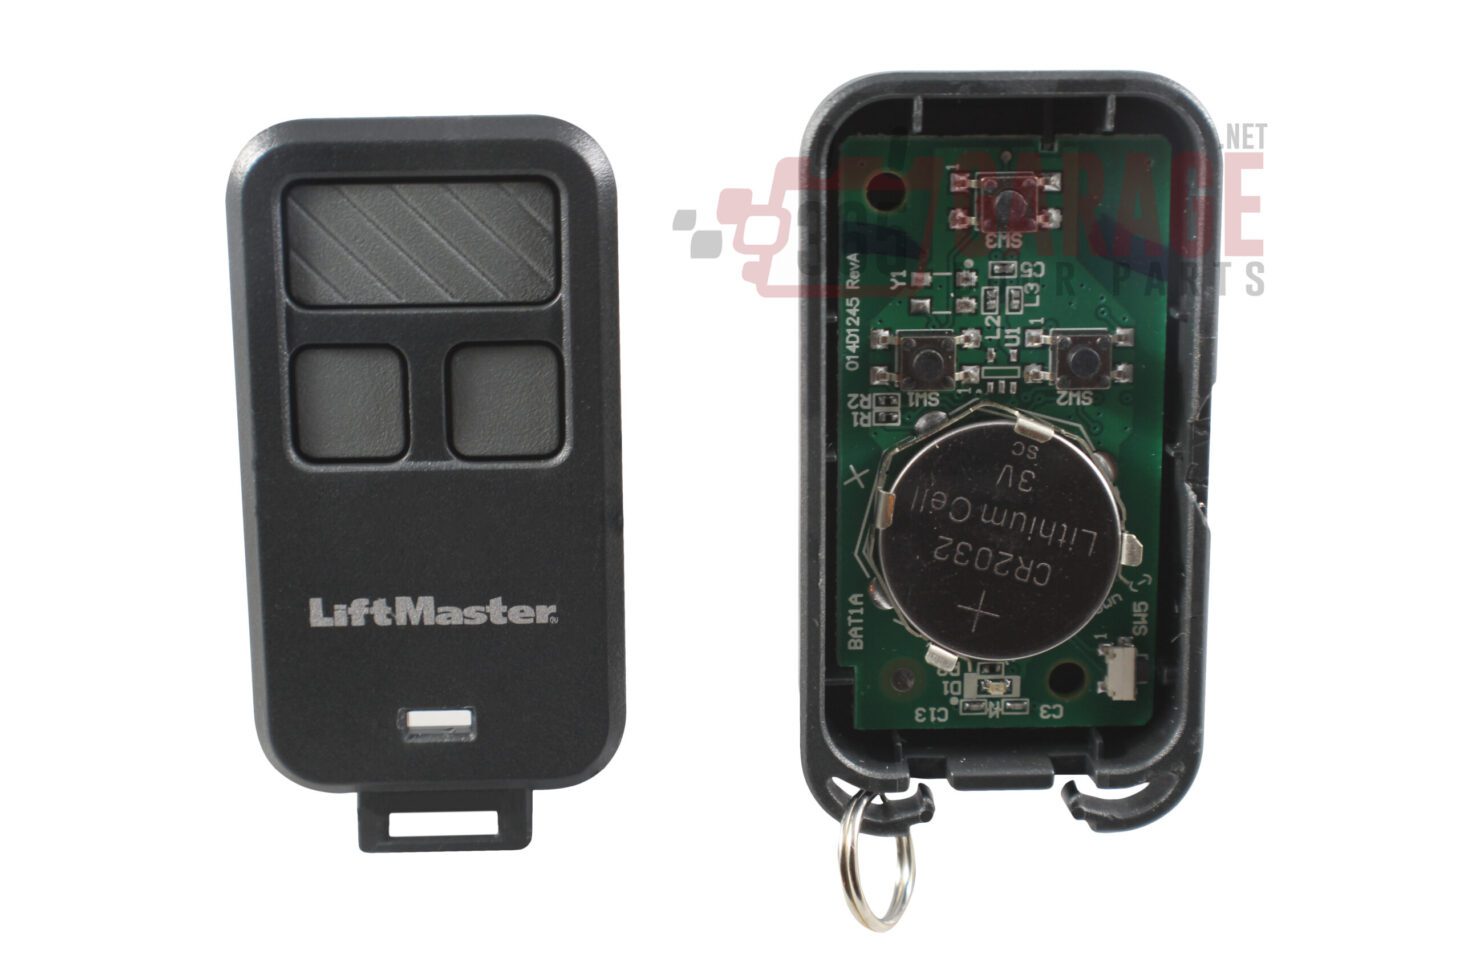 New Liftmaster 890max Mini Key Chain Garage Door Opener Remote